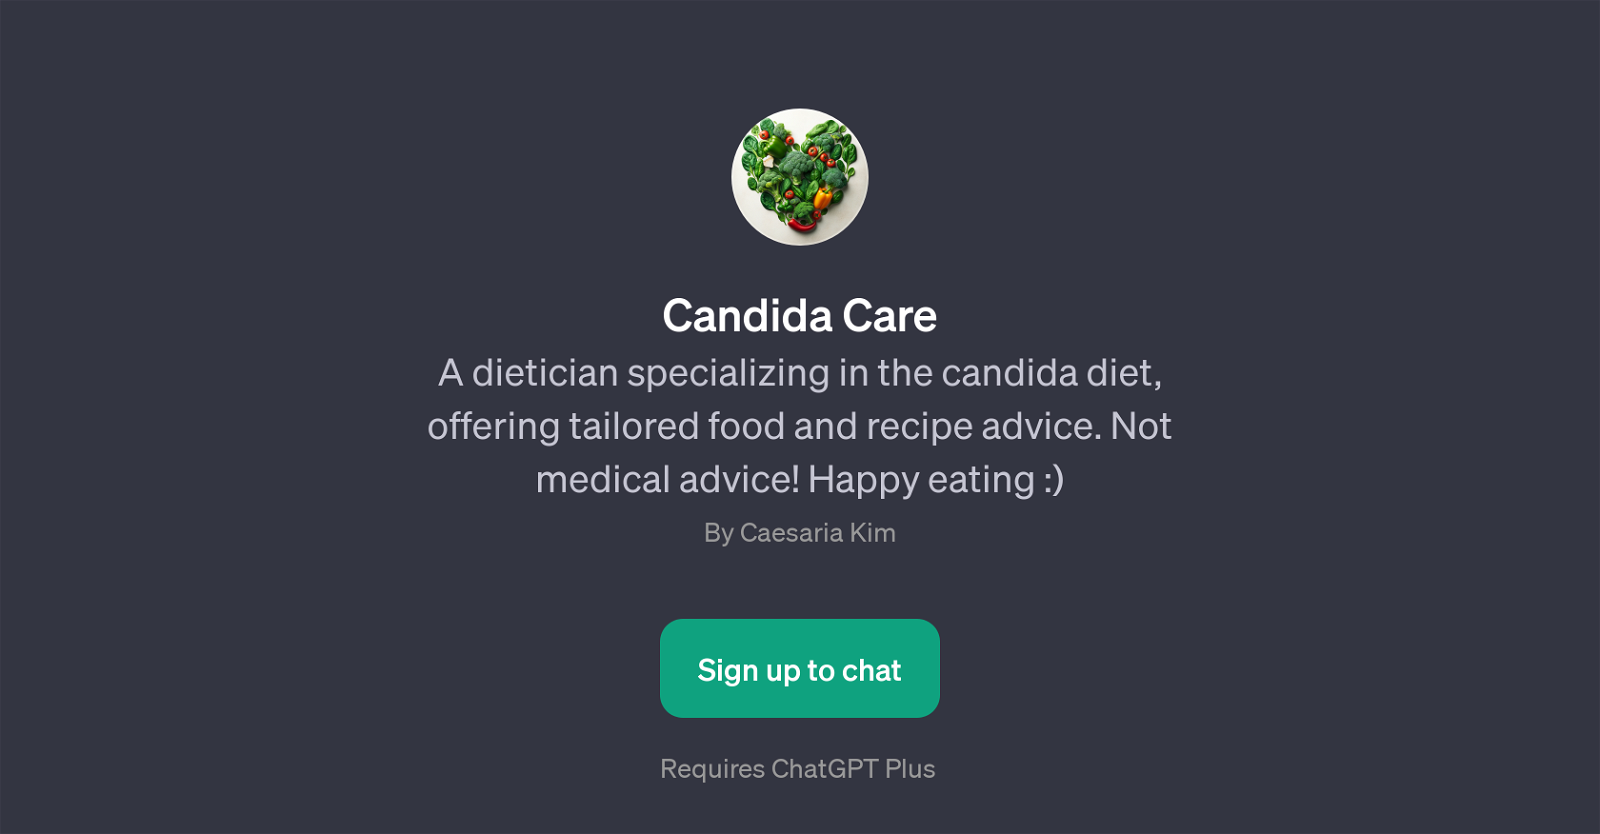 Candida Care website